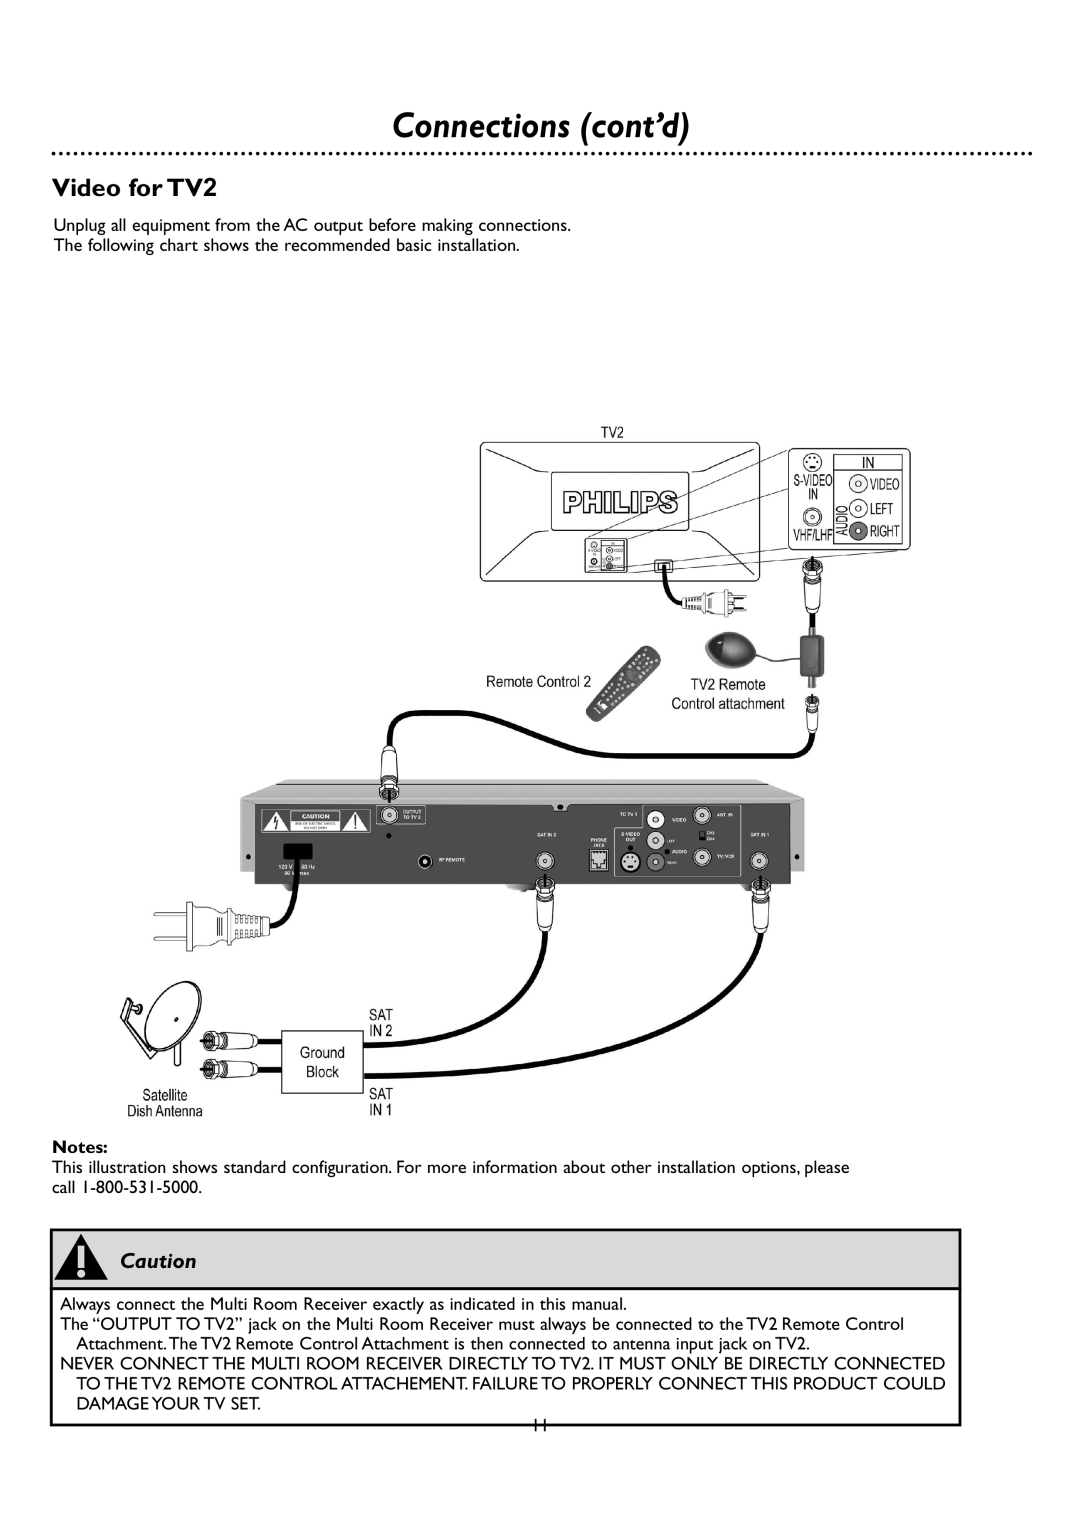 DirecTV DSR 660 manual Video for TV2, Connections cont’d, sCaution 